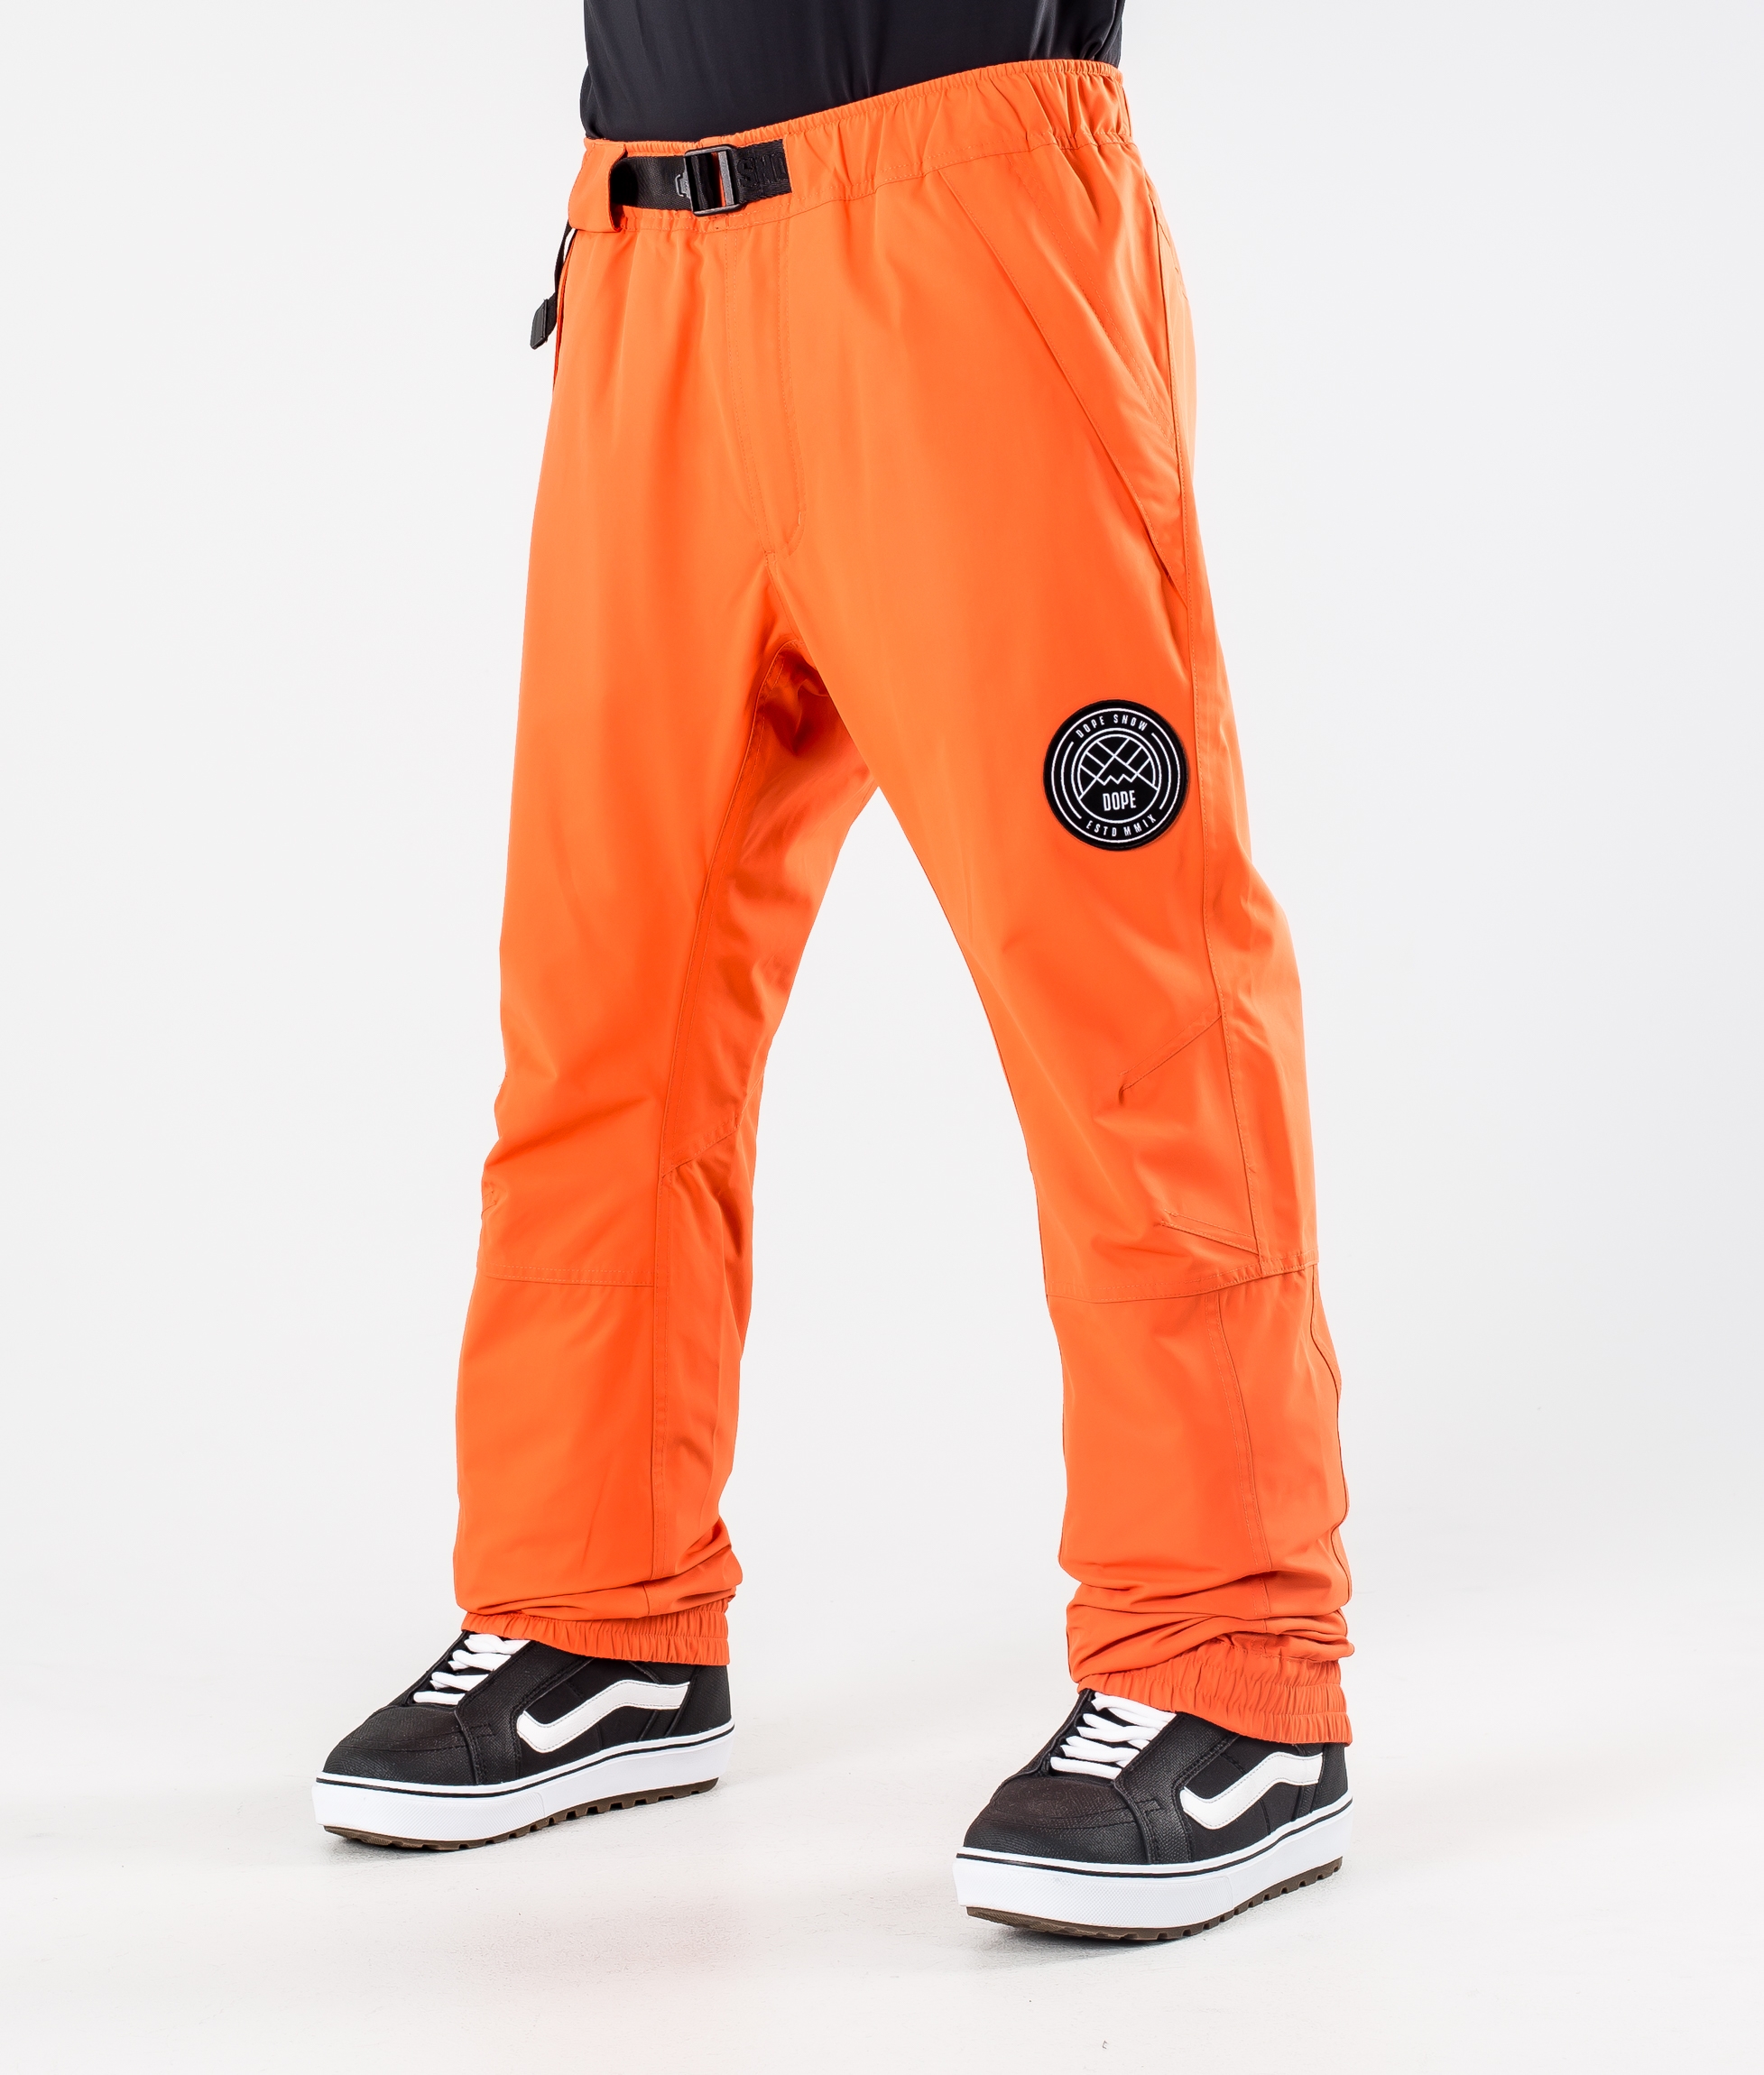 Dope Blizzard 2020 スノボ パンツ メンズ Orange - オレンジ